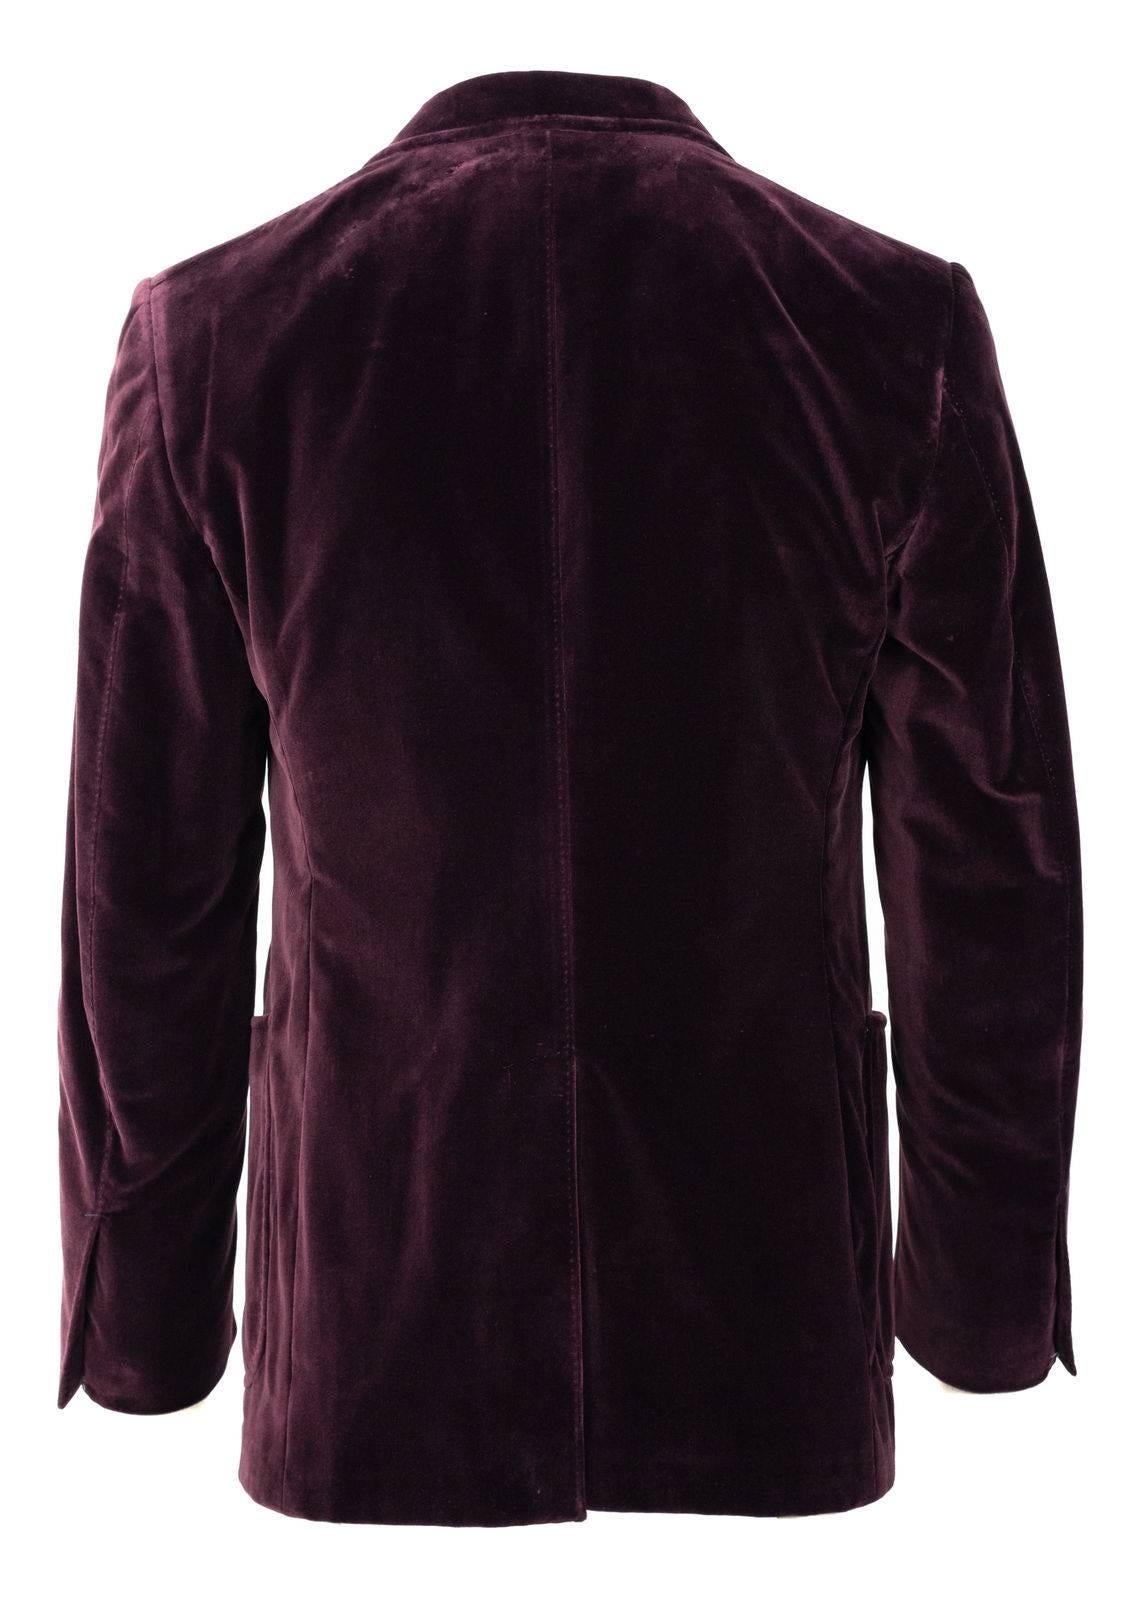 Tom Ford Burgundy Velvet Unfinished Hem Shelton Sport Jacket Sz54L/44L RTL$3440 In Excellent Condition For Sale In Brooklyn, NY